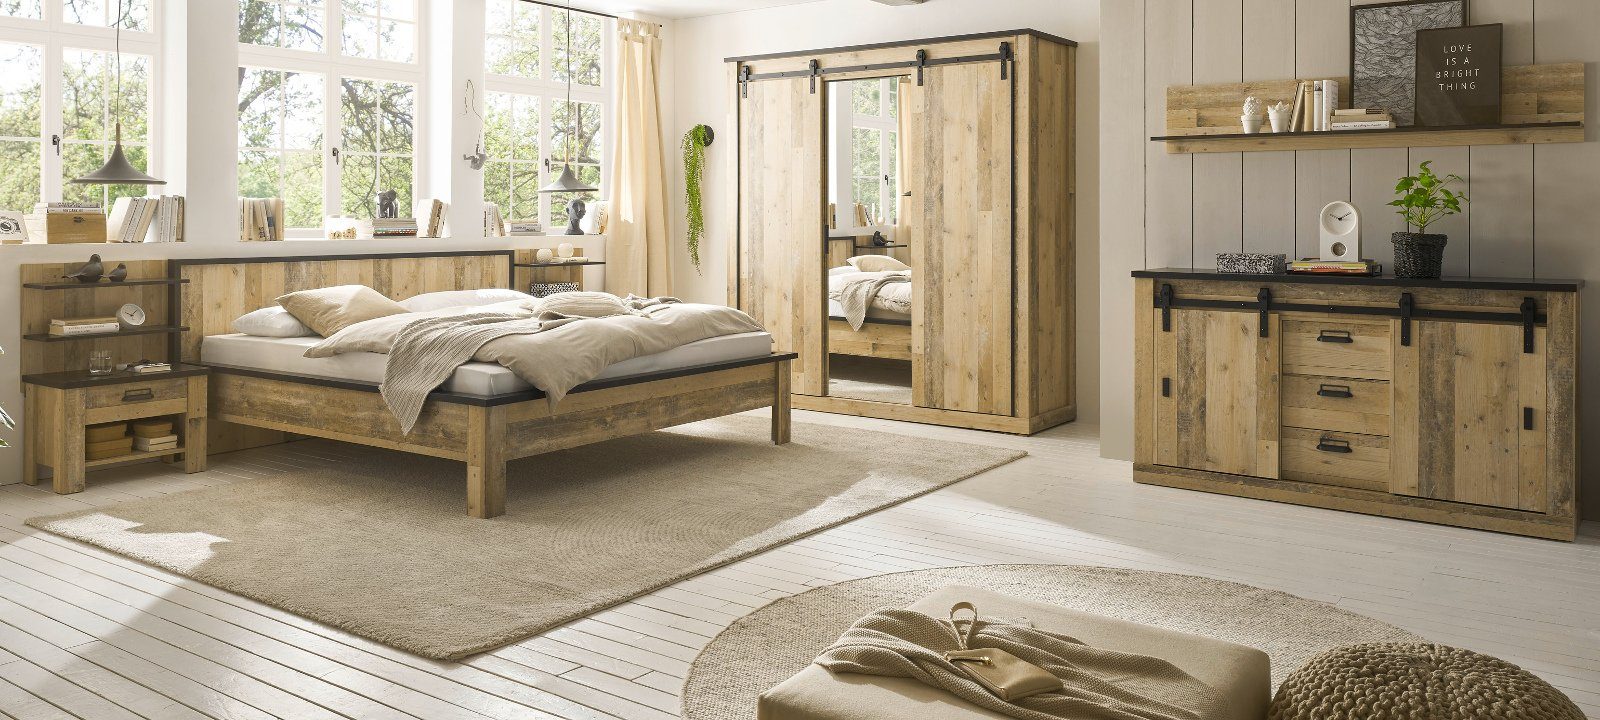 Liegefläche mit 6-teilig, 90x200 Komplettschlafzimmer Komplett-Set Stove, cm), (Used Soft-Close-Funktion Design, Furn.Design Wood